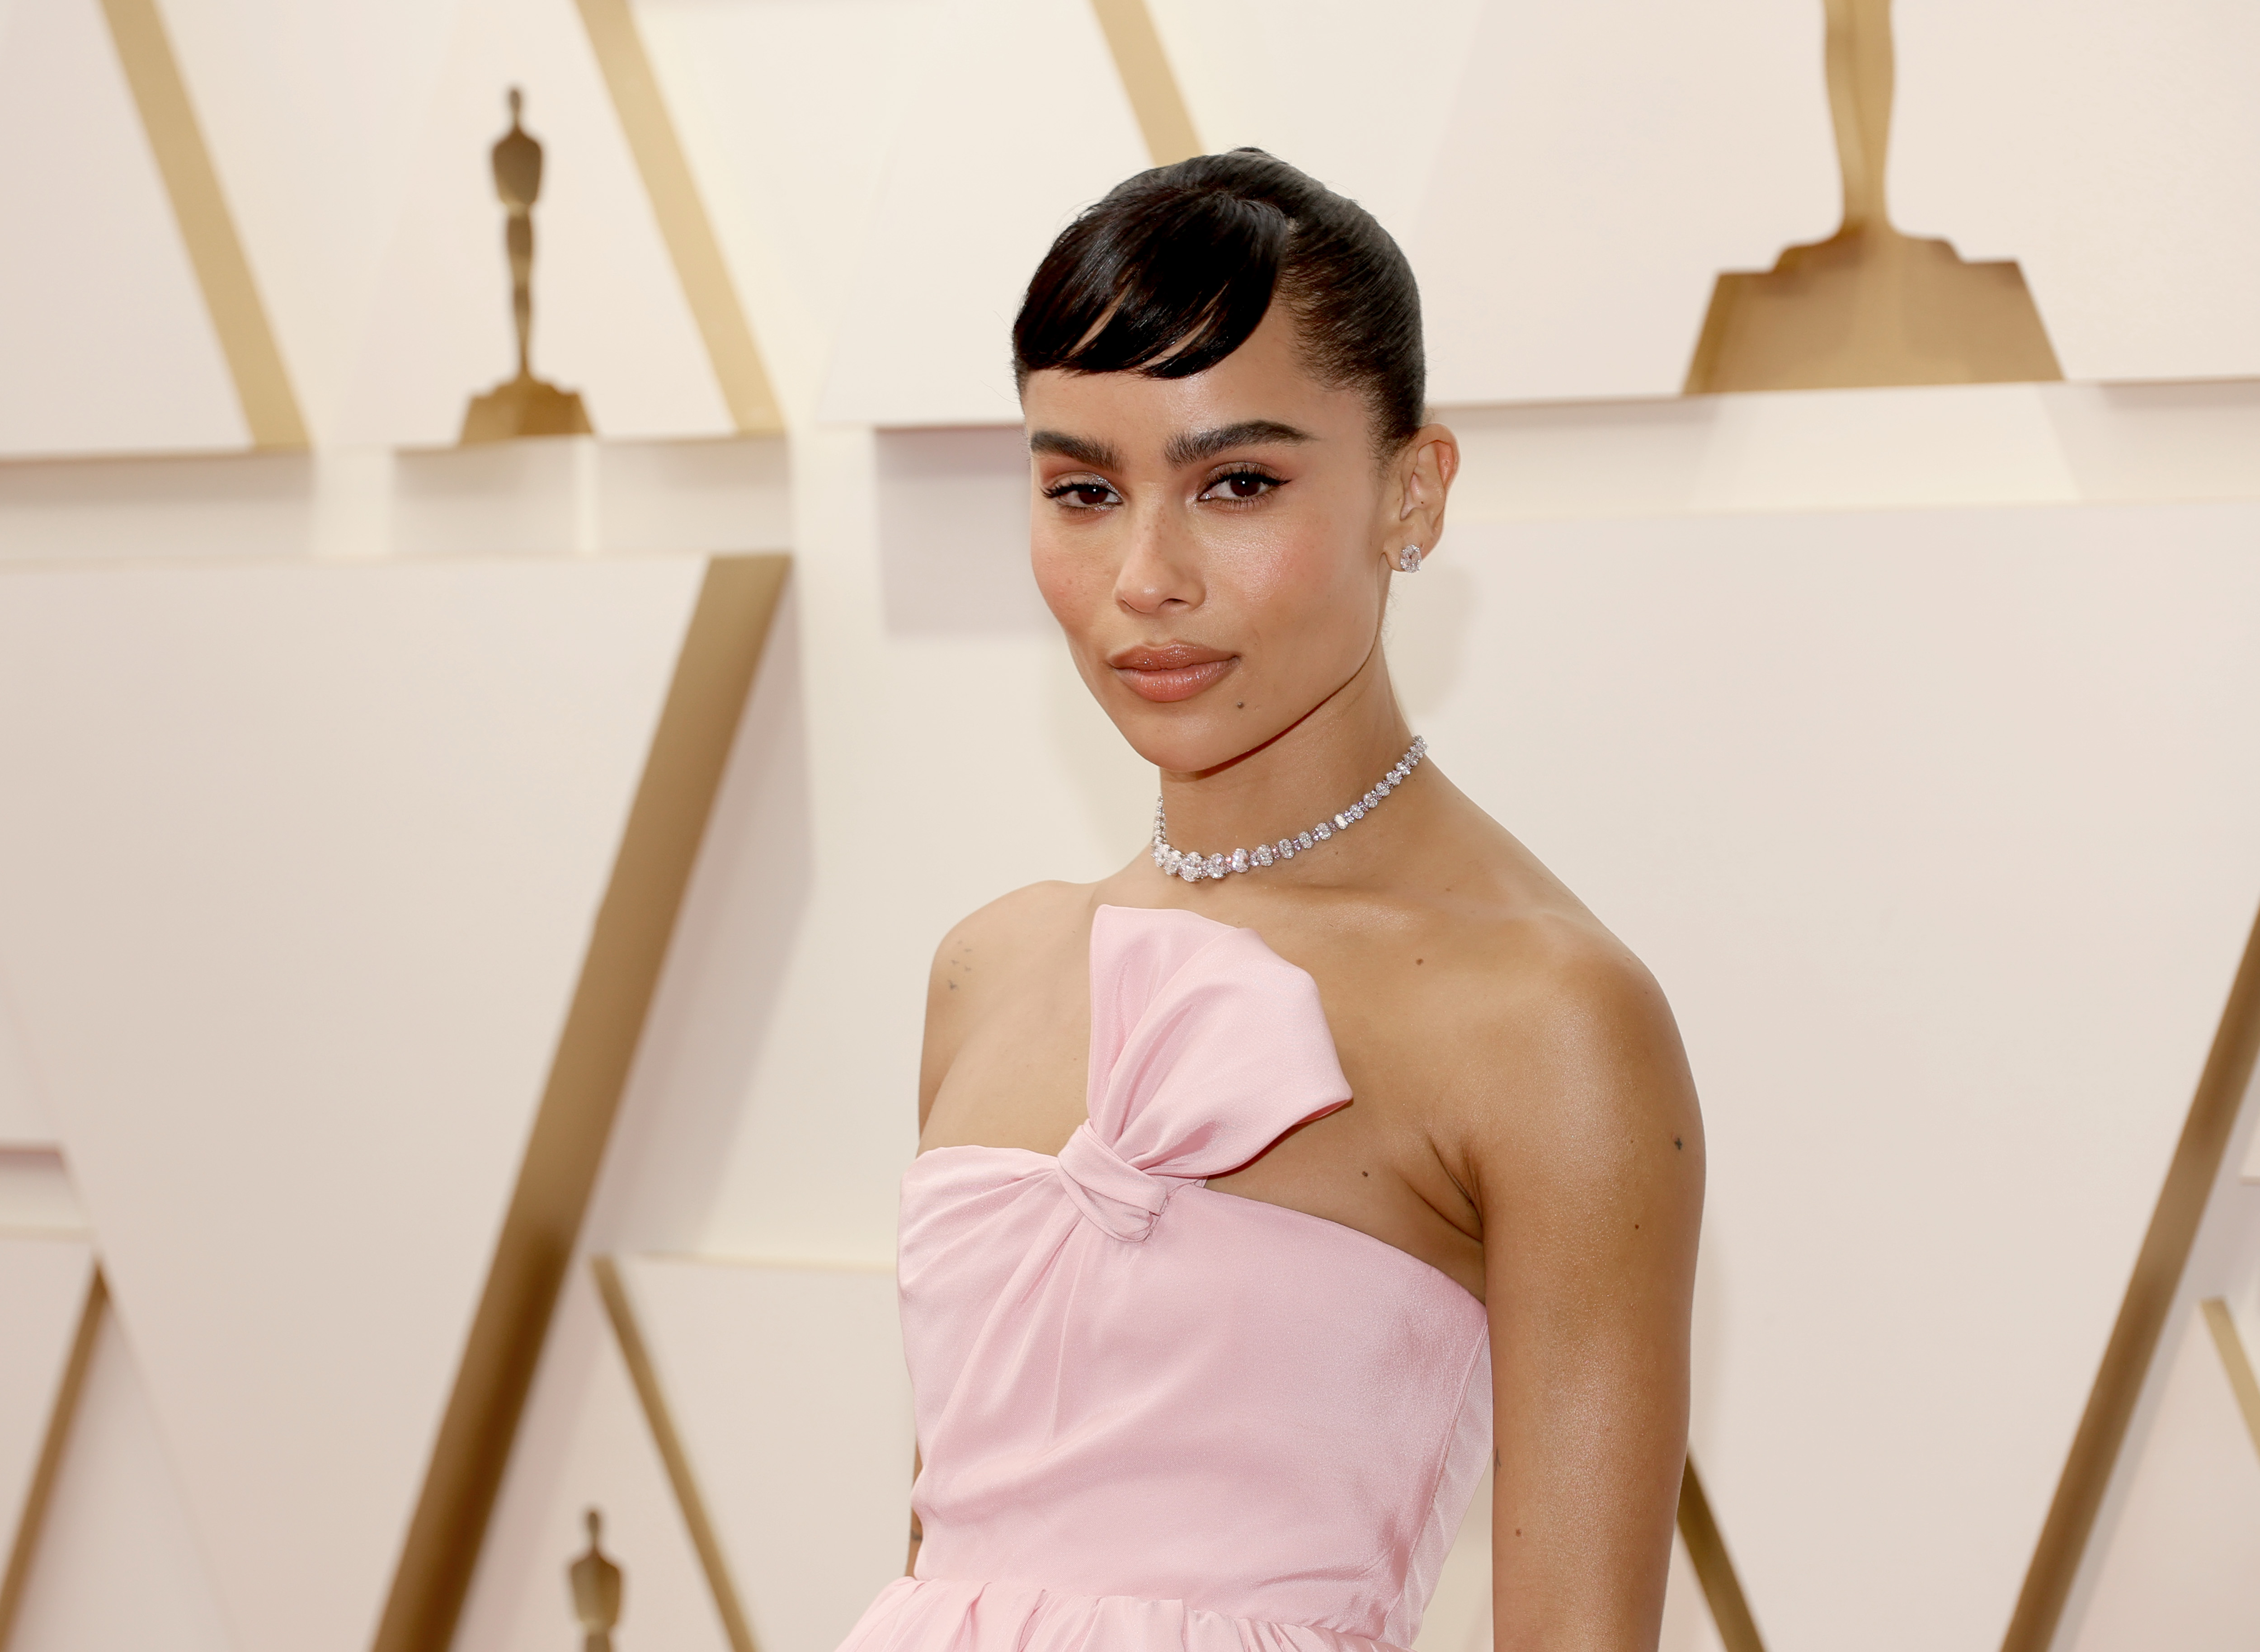 Zoe Kravitz wears a pink dress at the Oscars.